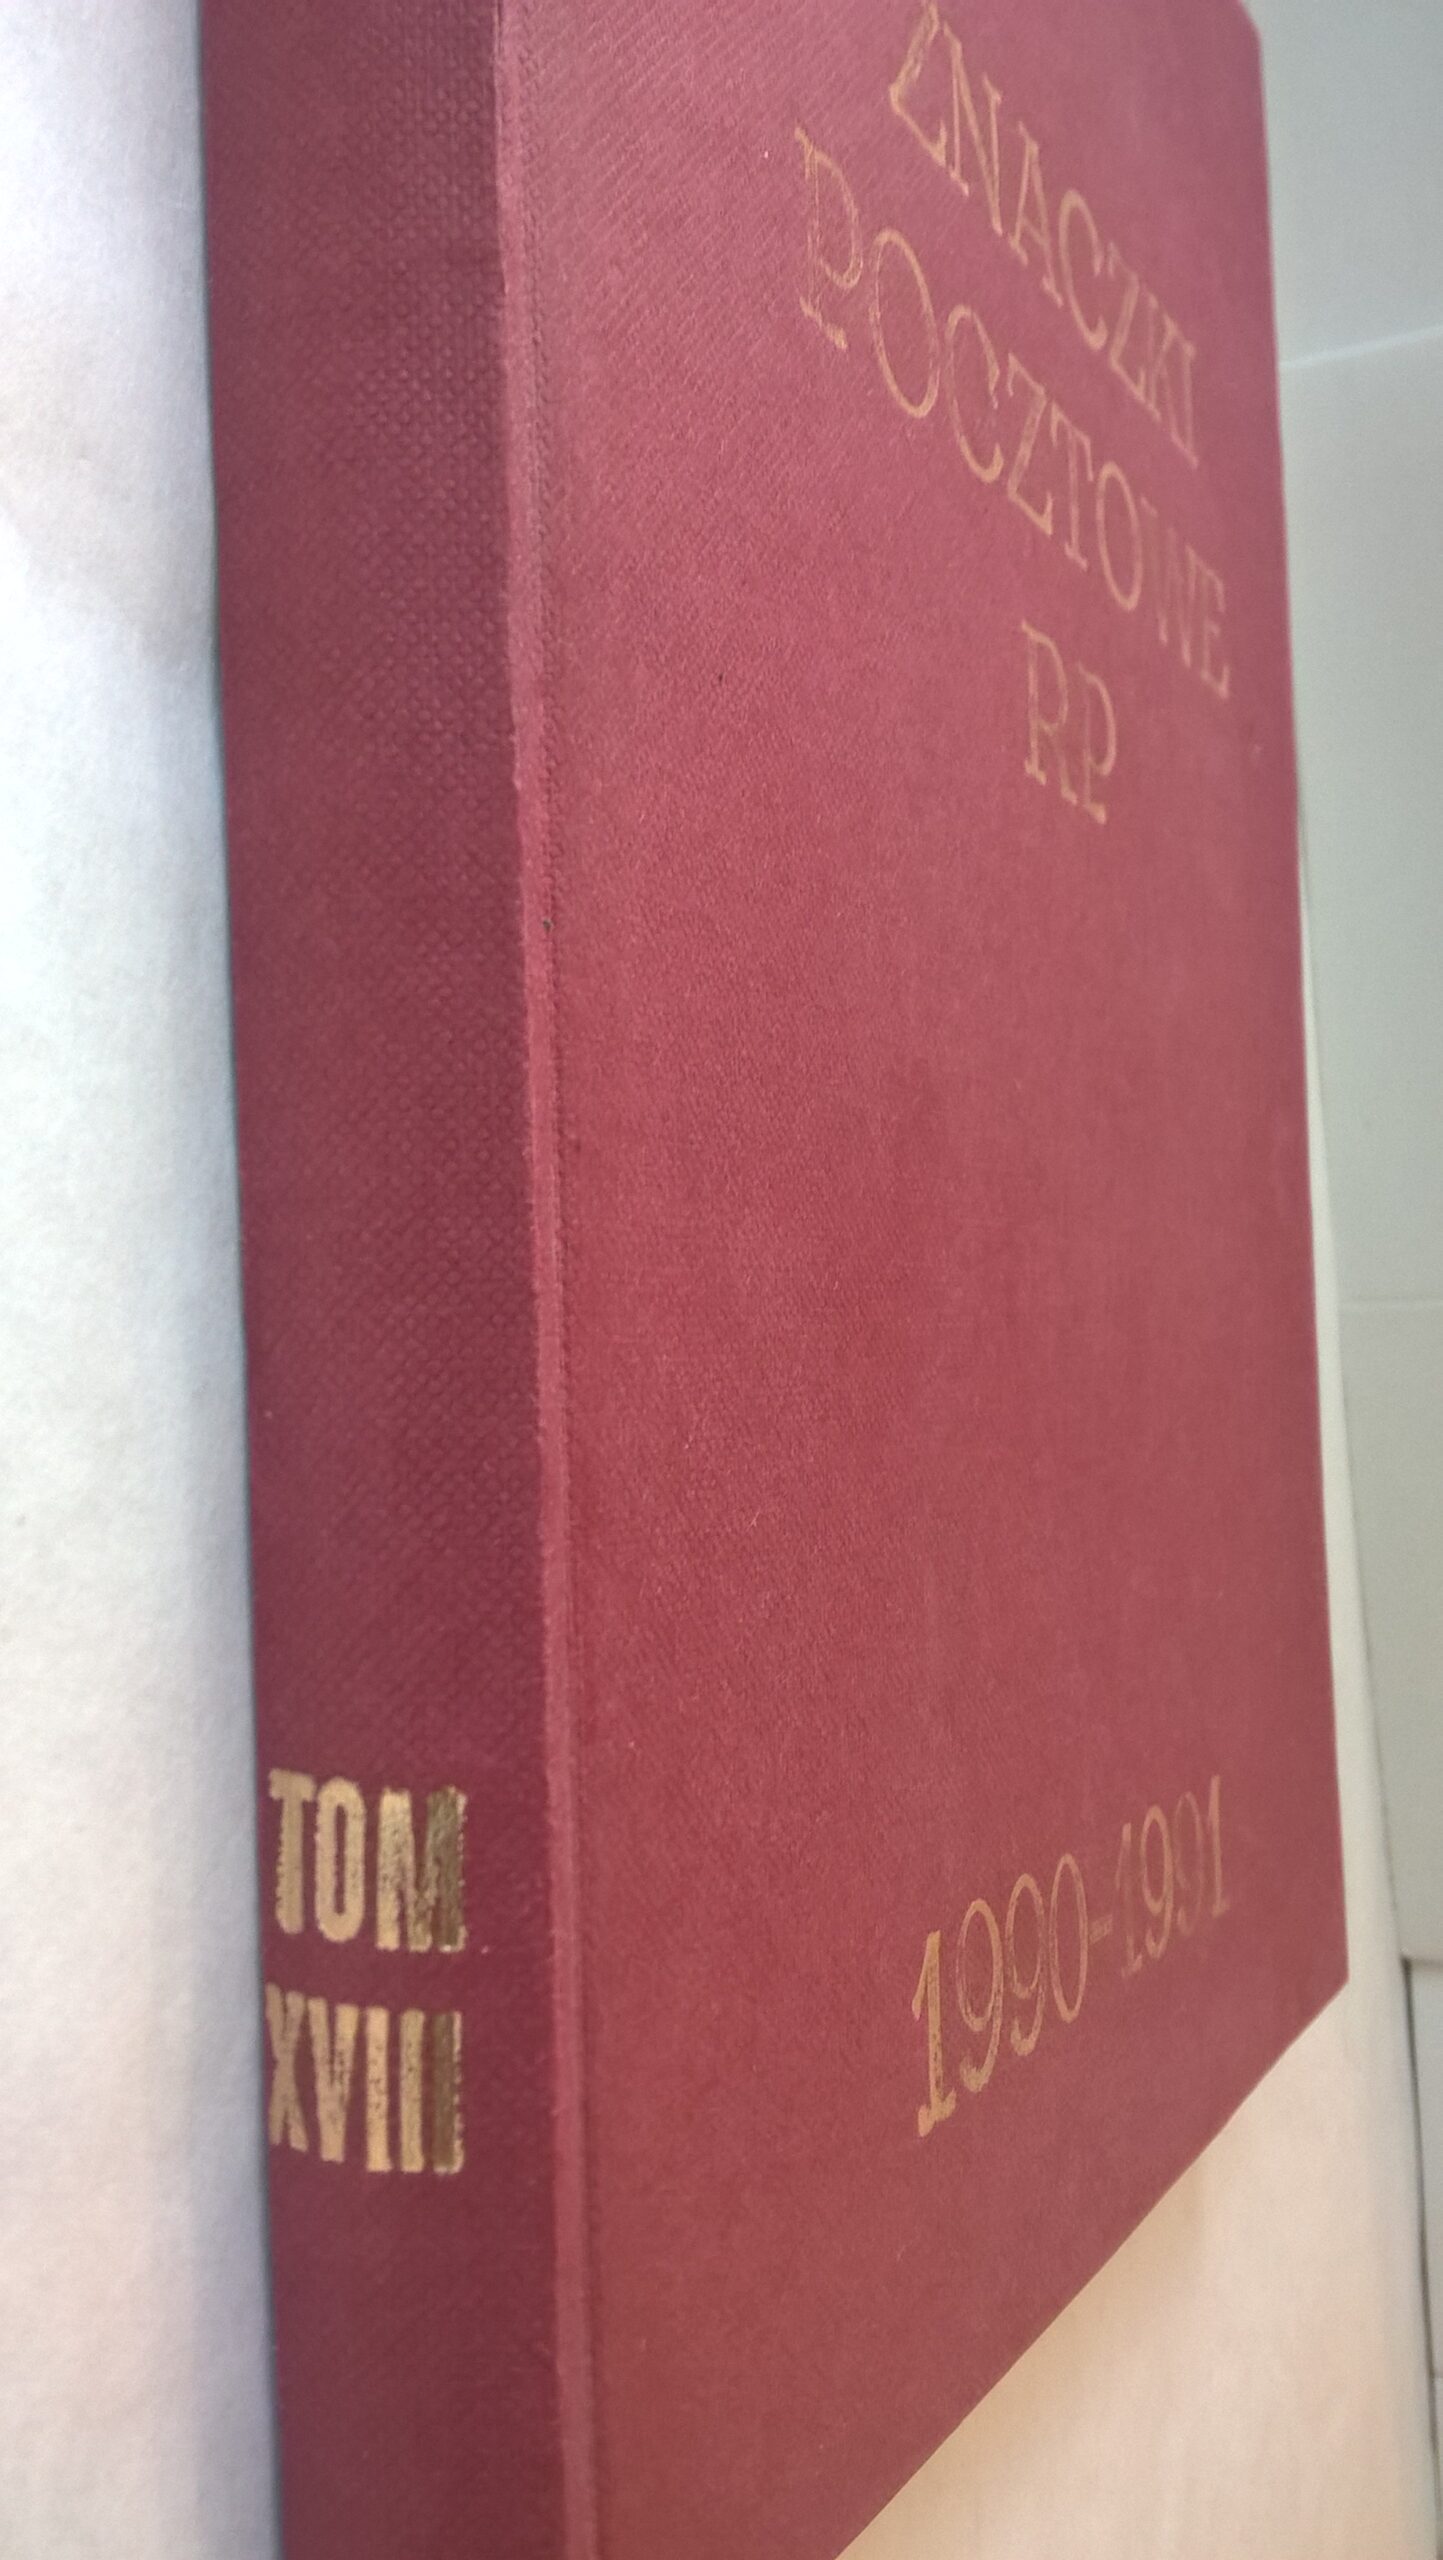 Klaser – Znaczki pocztowe RP, Tom XVIII, 1990-1991